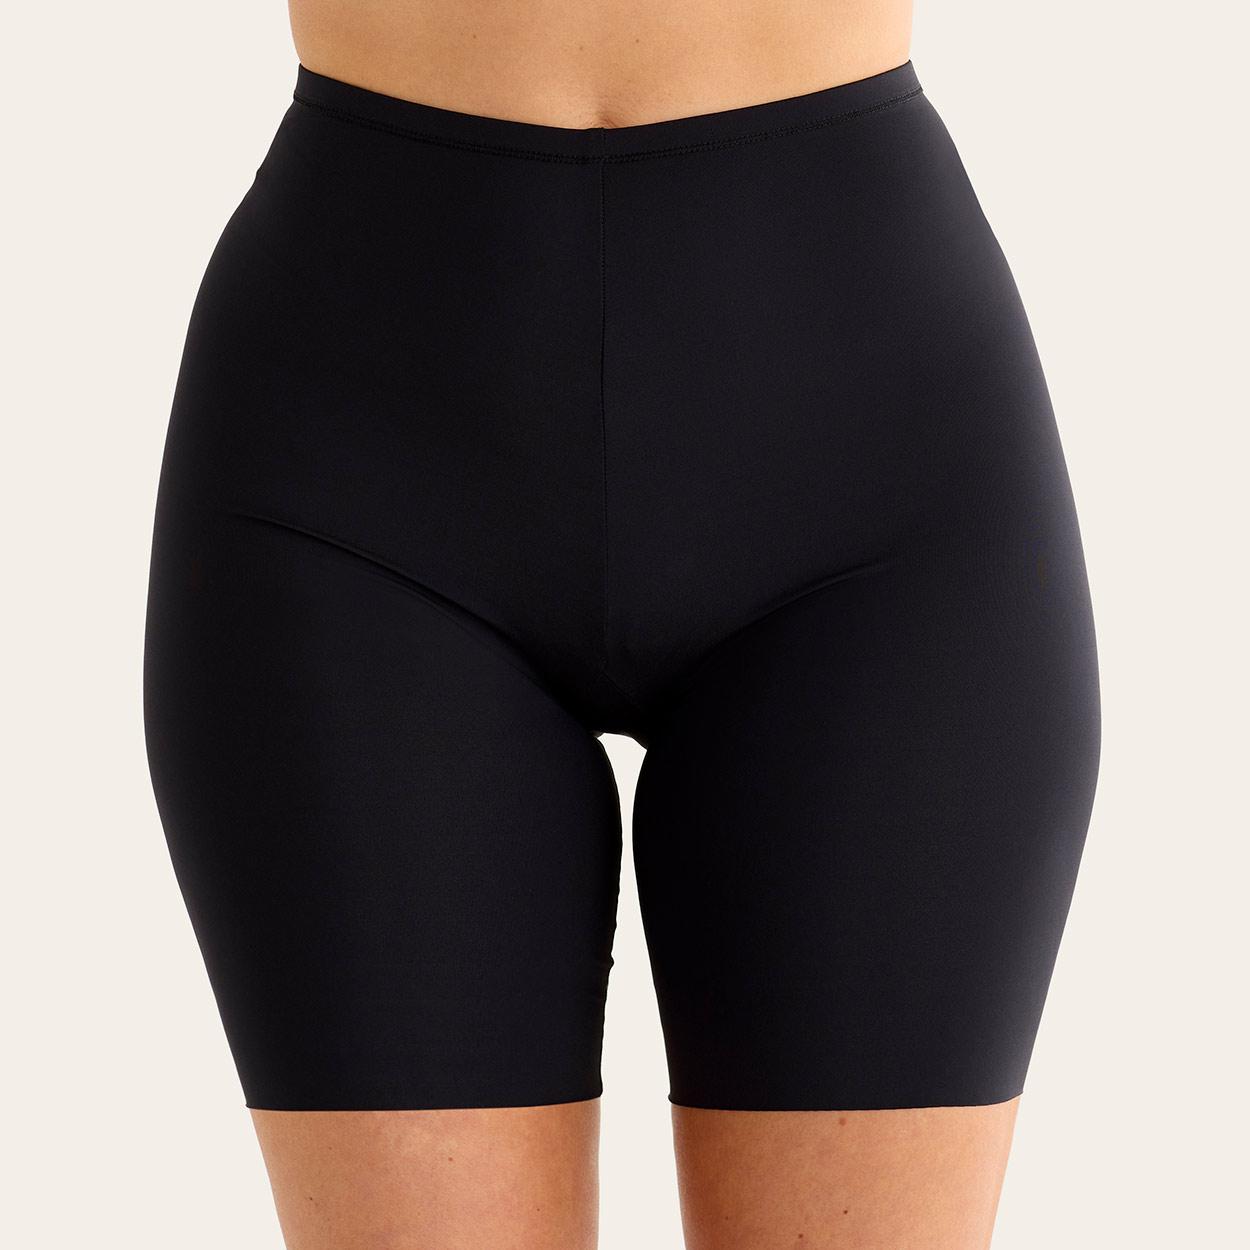 Swegmark Panty Modell Cool & Dry in Farbe Schwarz